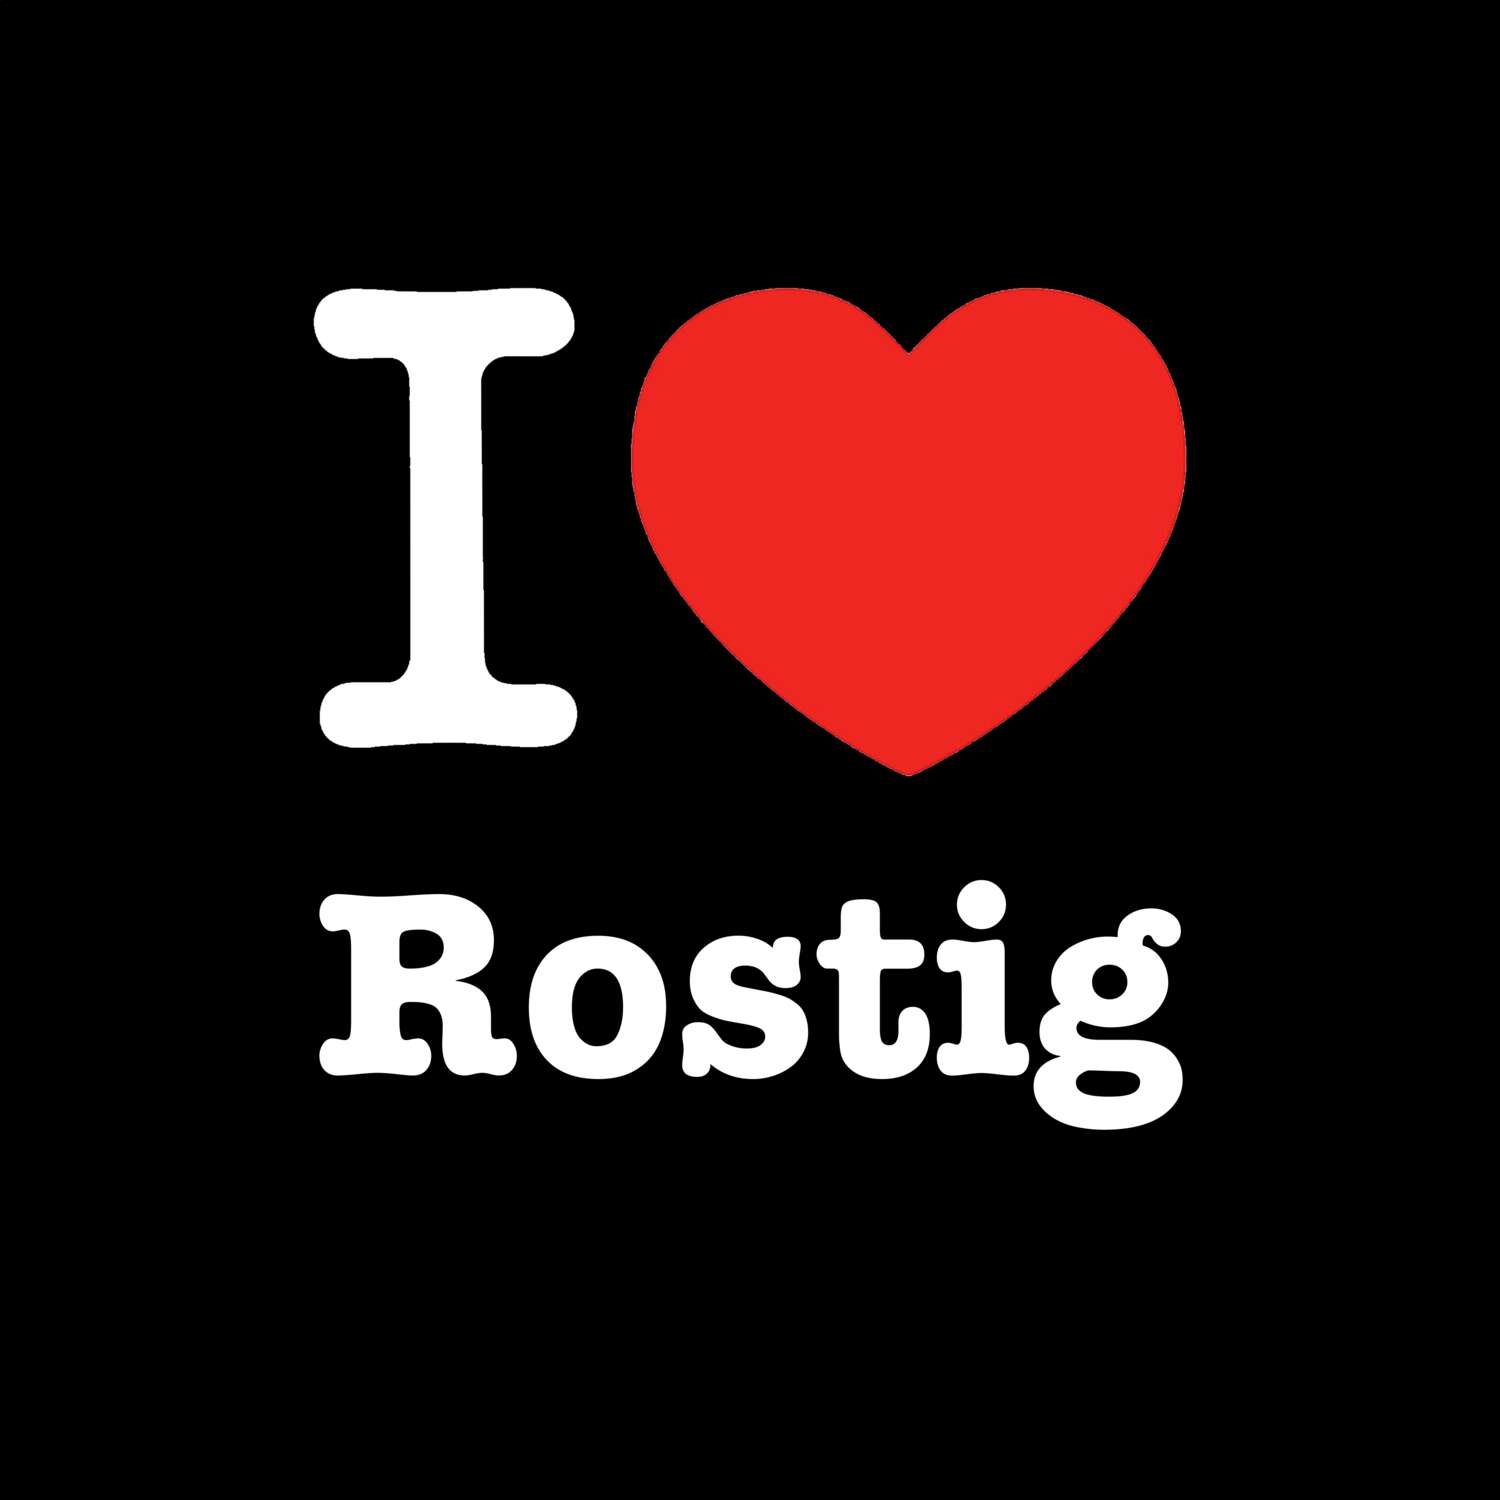 Rostig T-Shirt »I love«